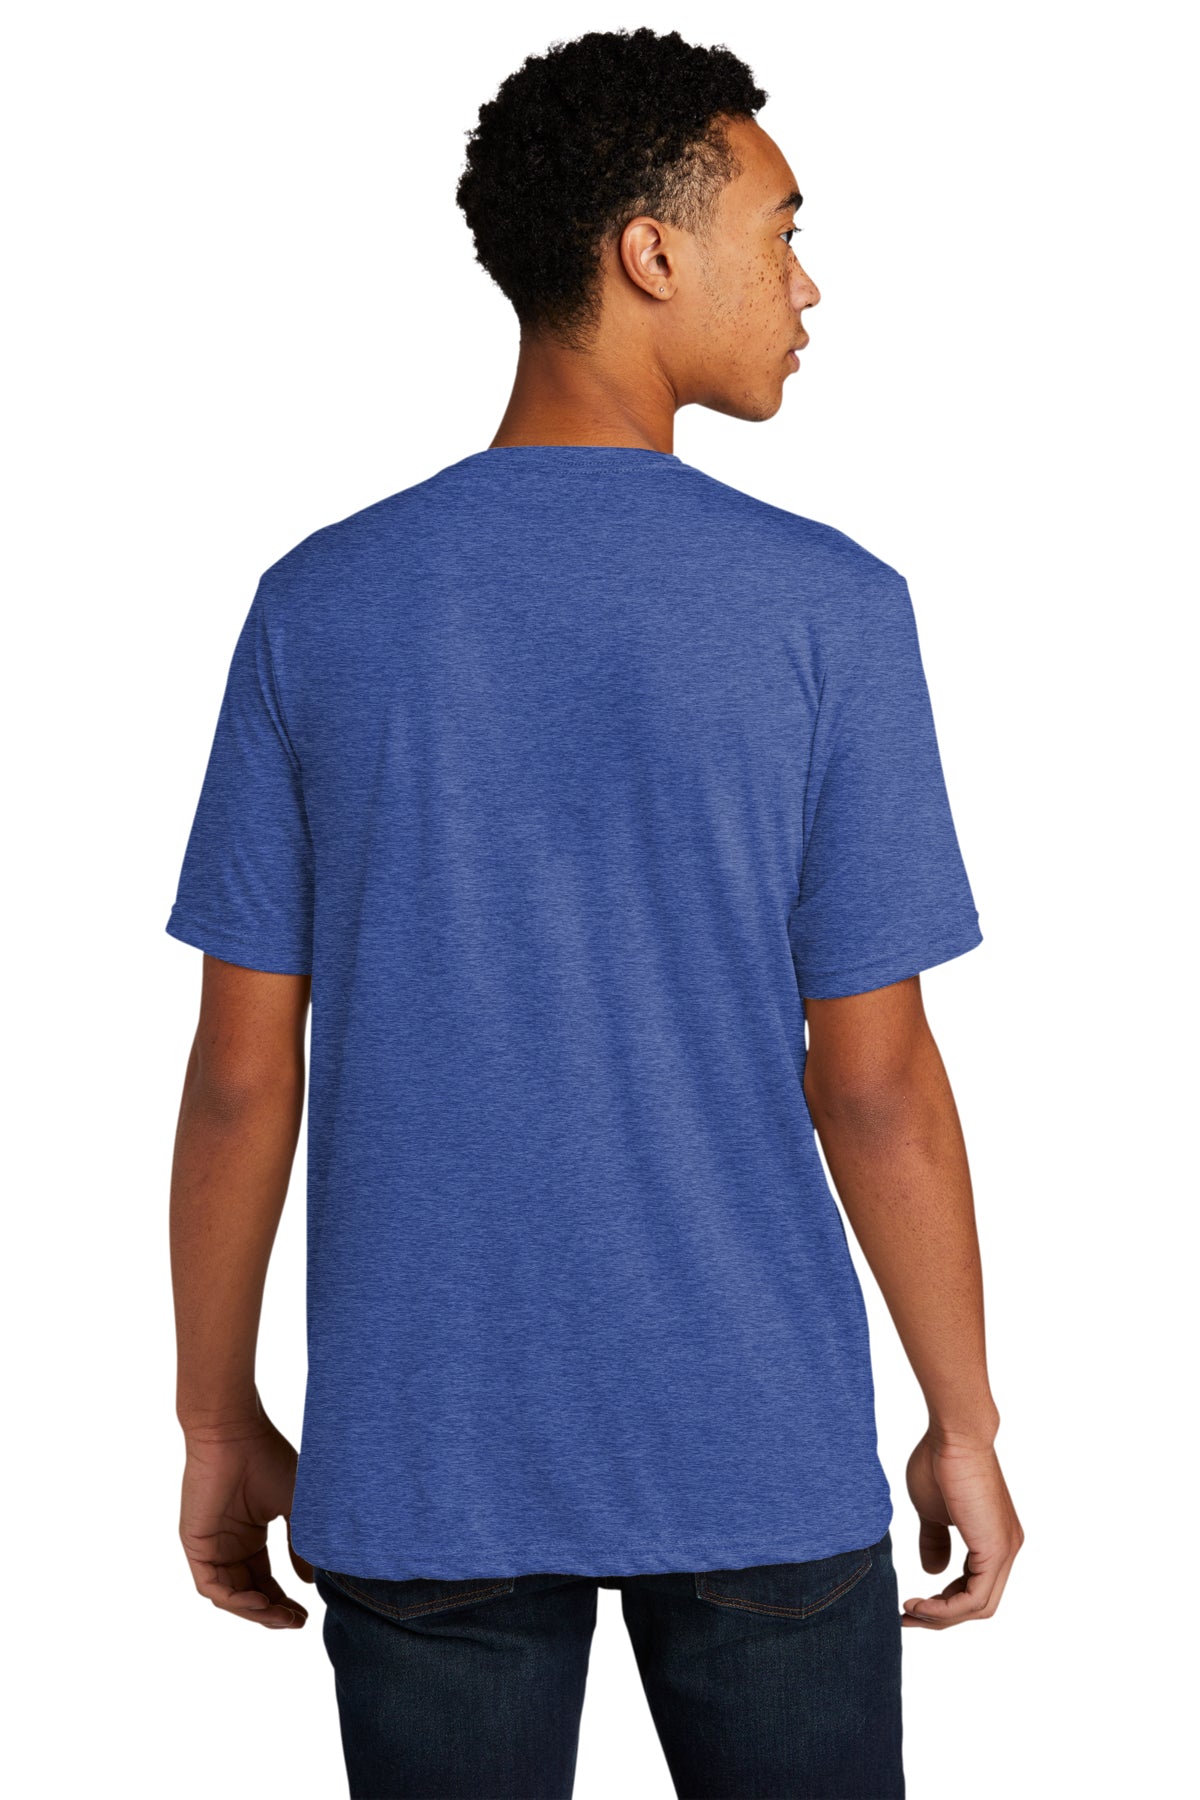 Next Level Unisex Poly Cotton Custom T-Shirts, Royal